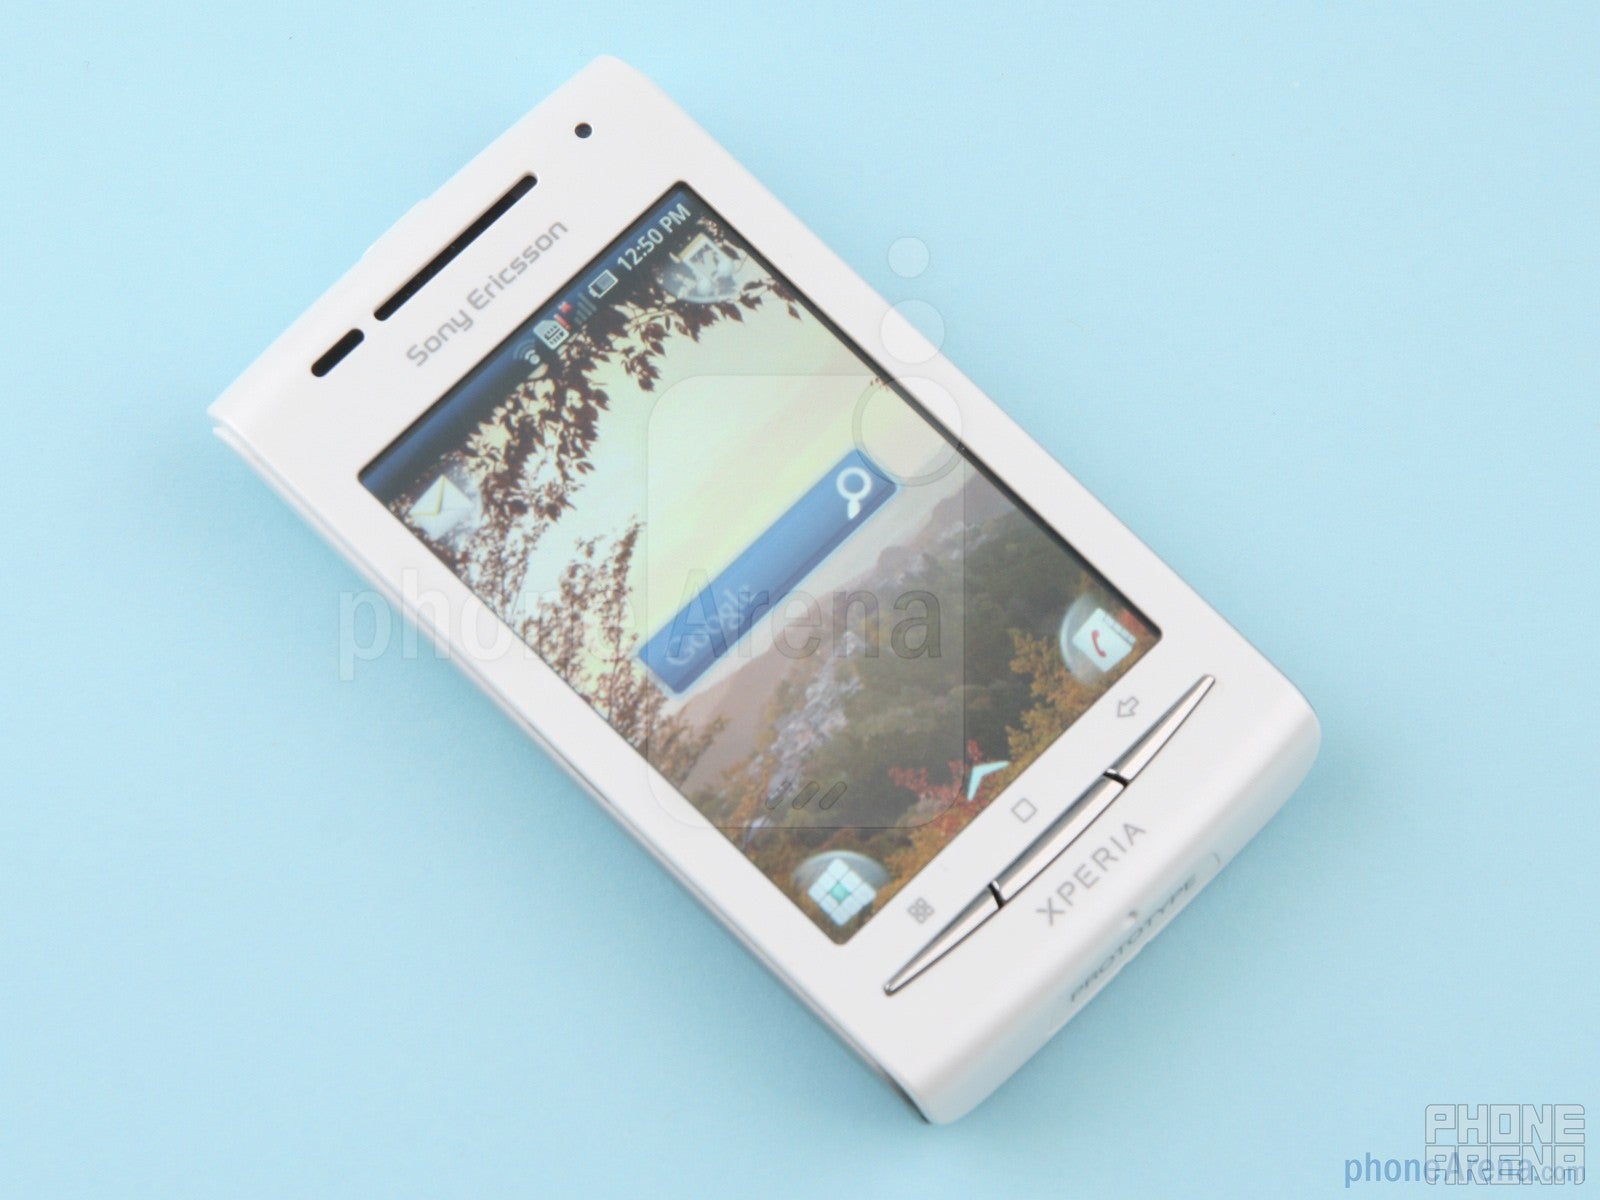 Sony Ericsson Xperia X8 Preview